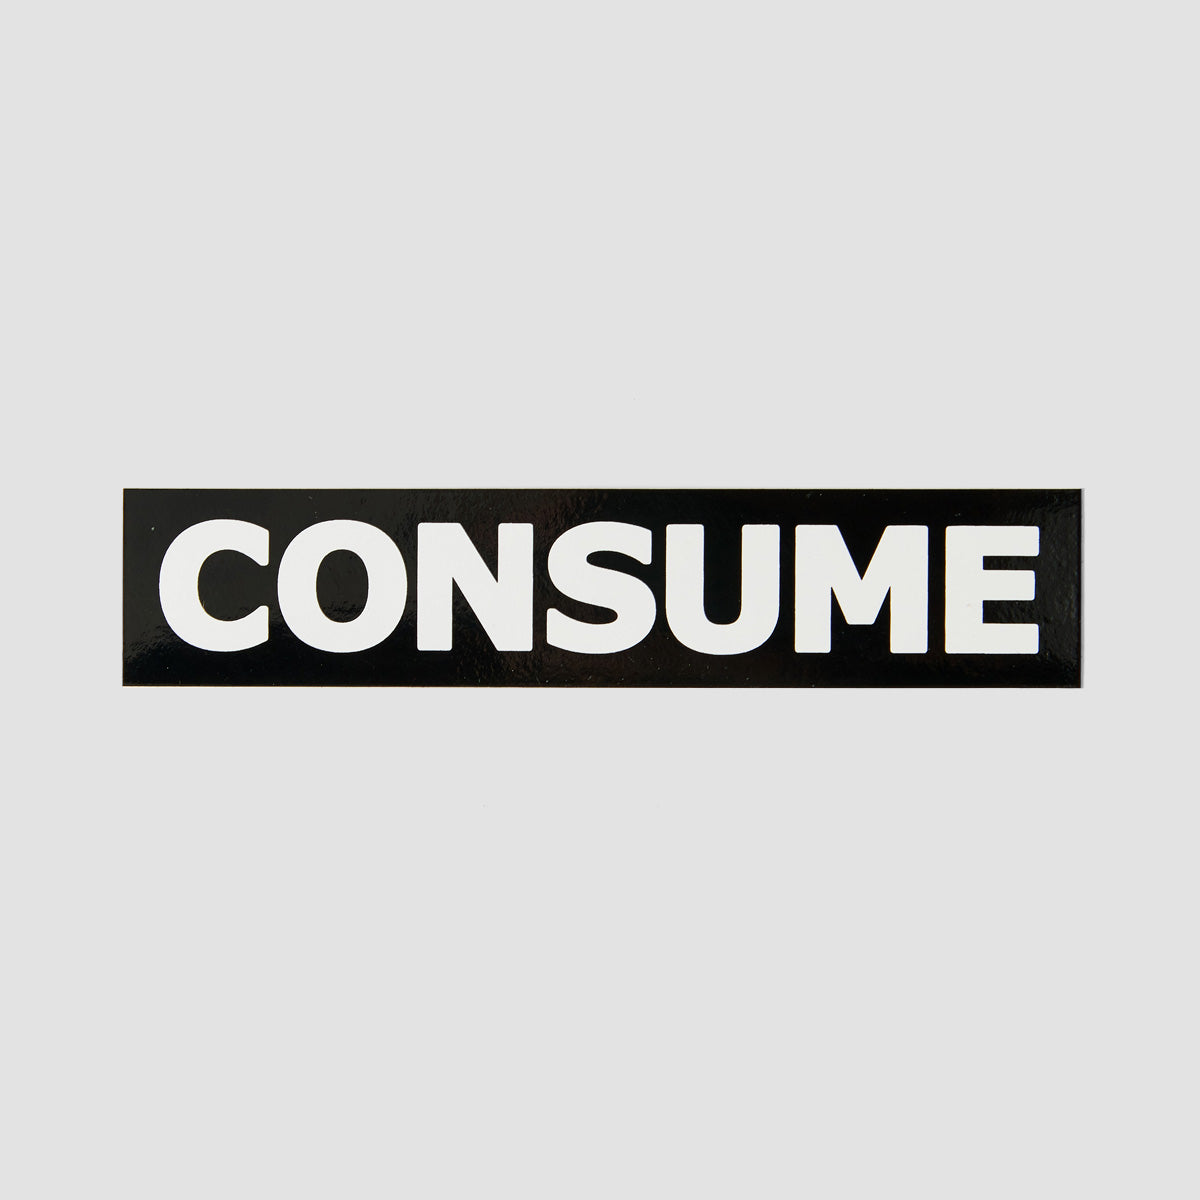 Consume Logo Sticker Black/White 120x25mm